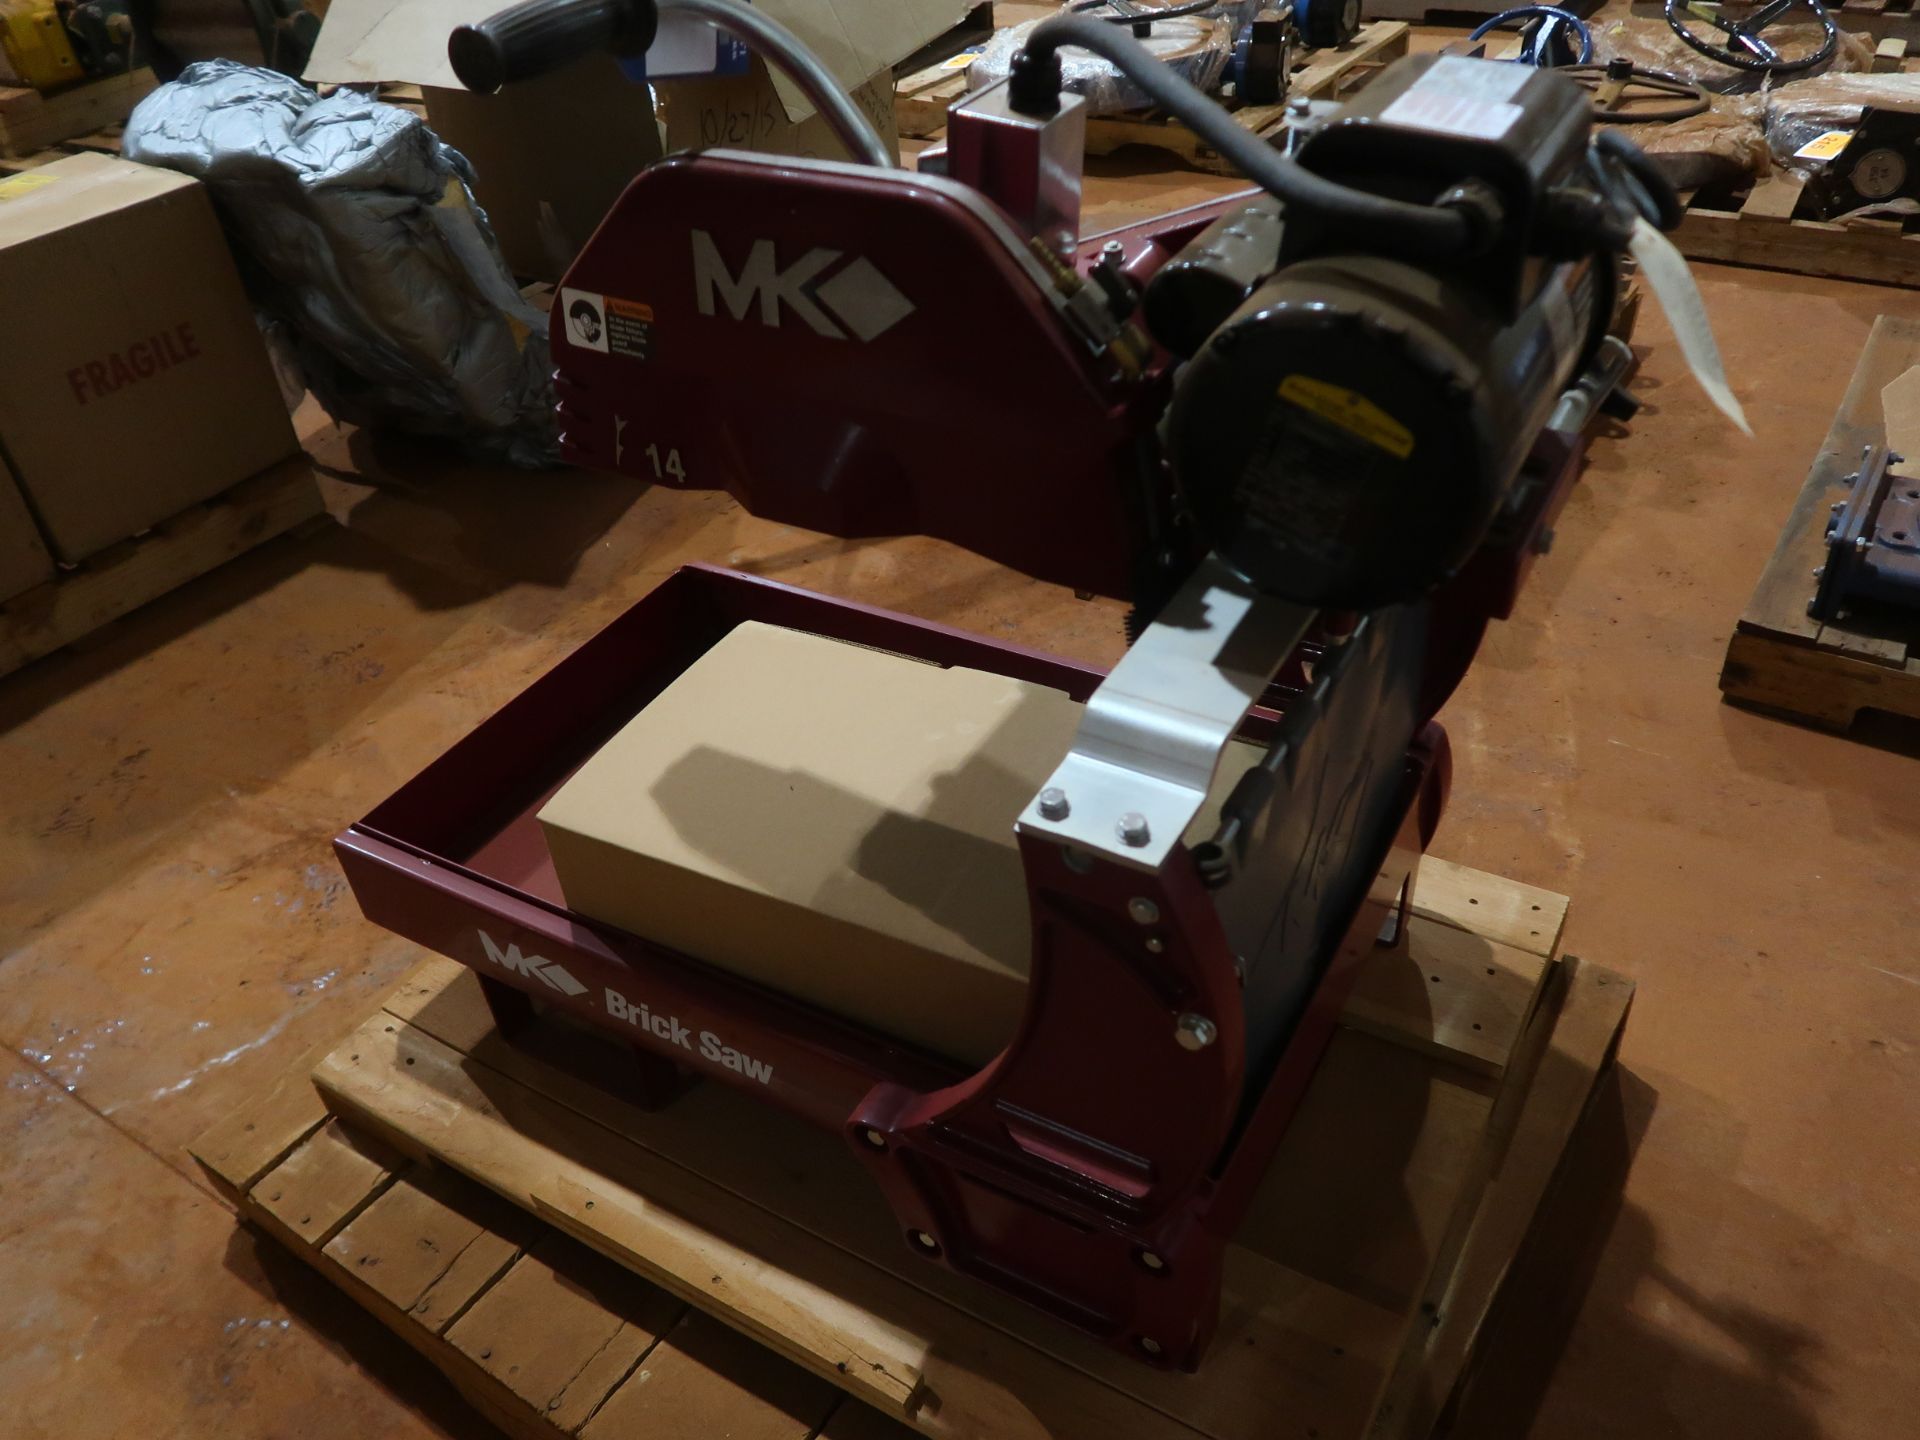 MK brick saw, model MK-2002 - Image 2 of 3